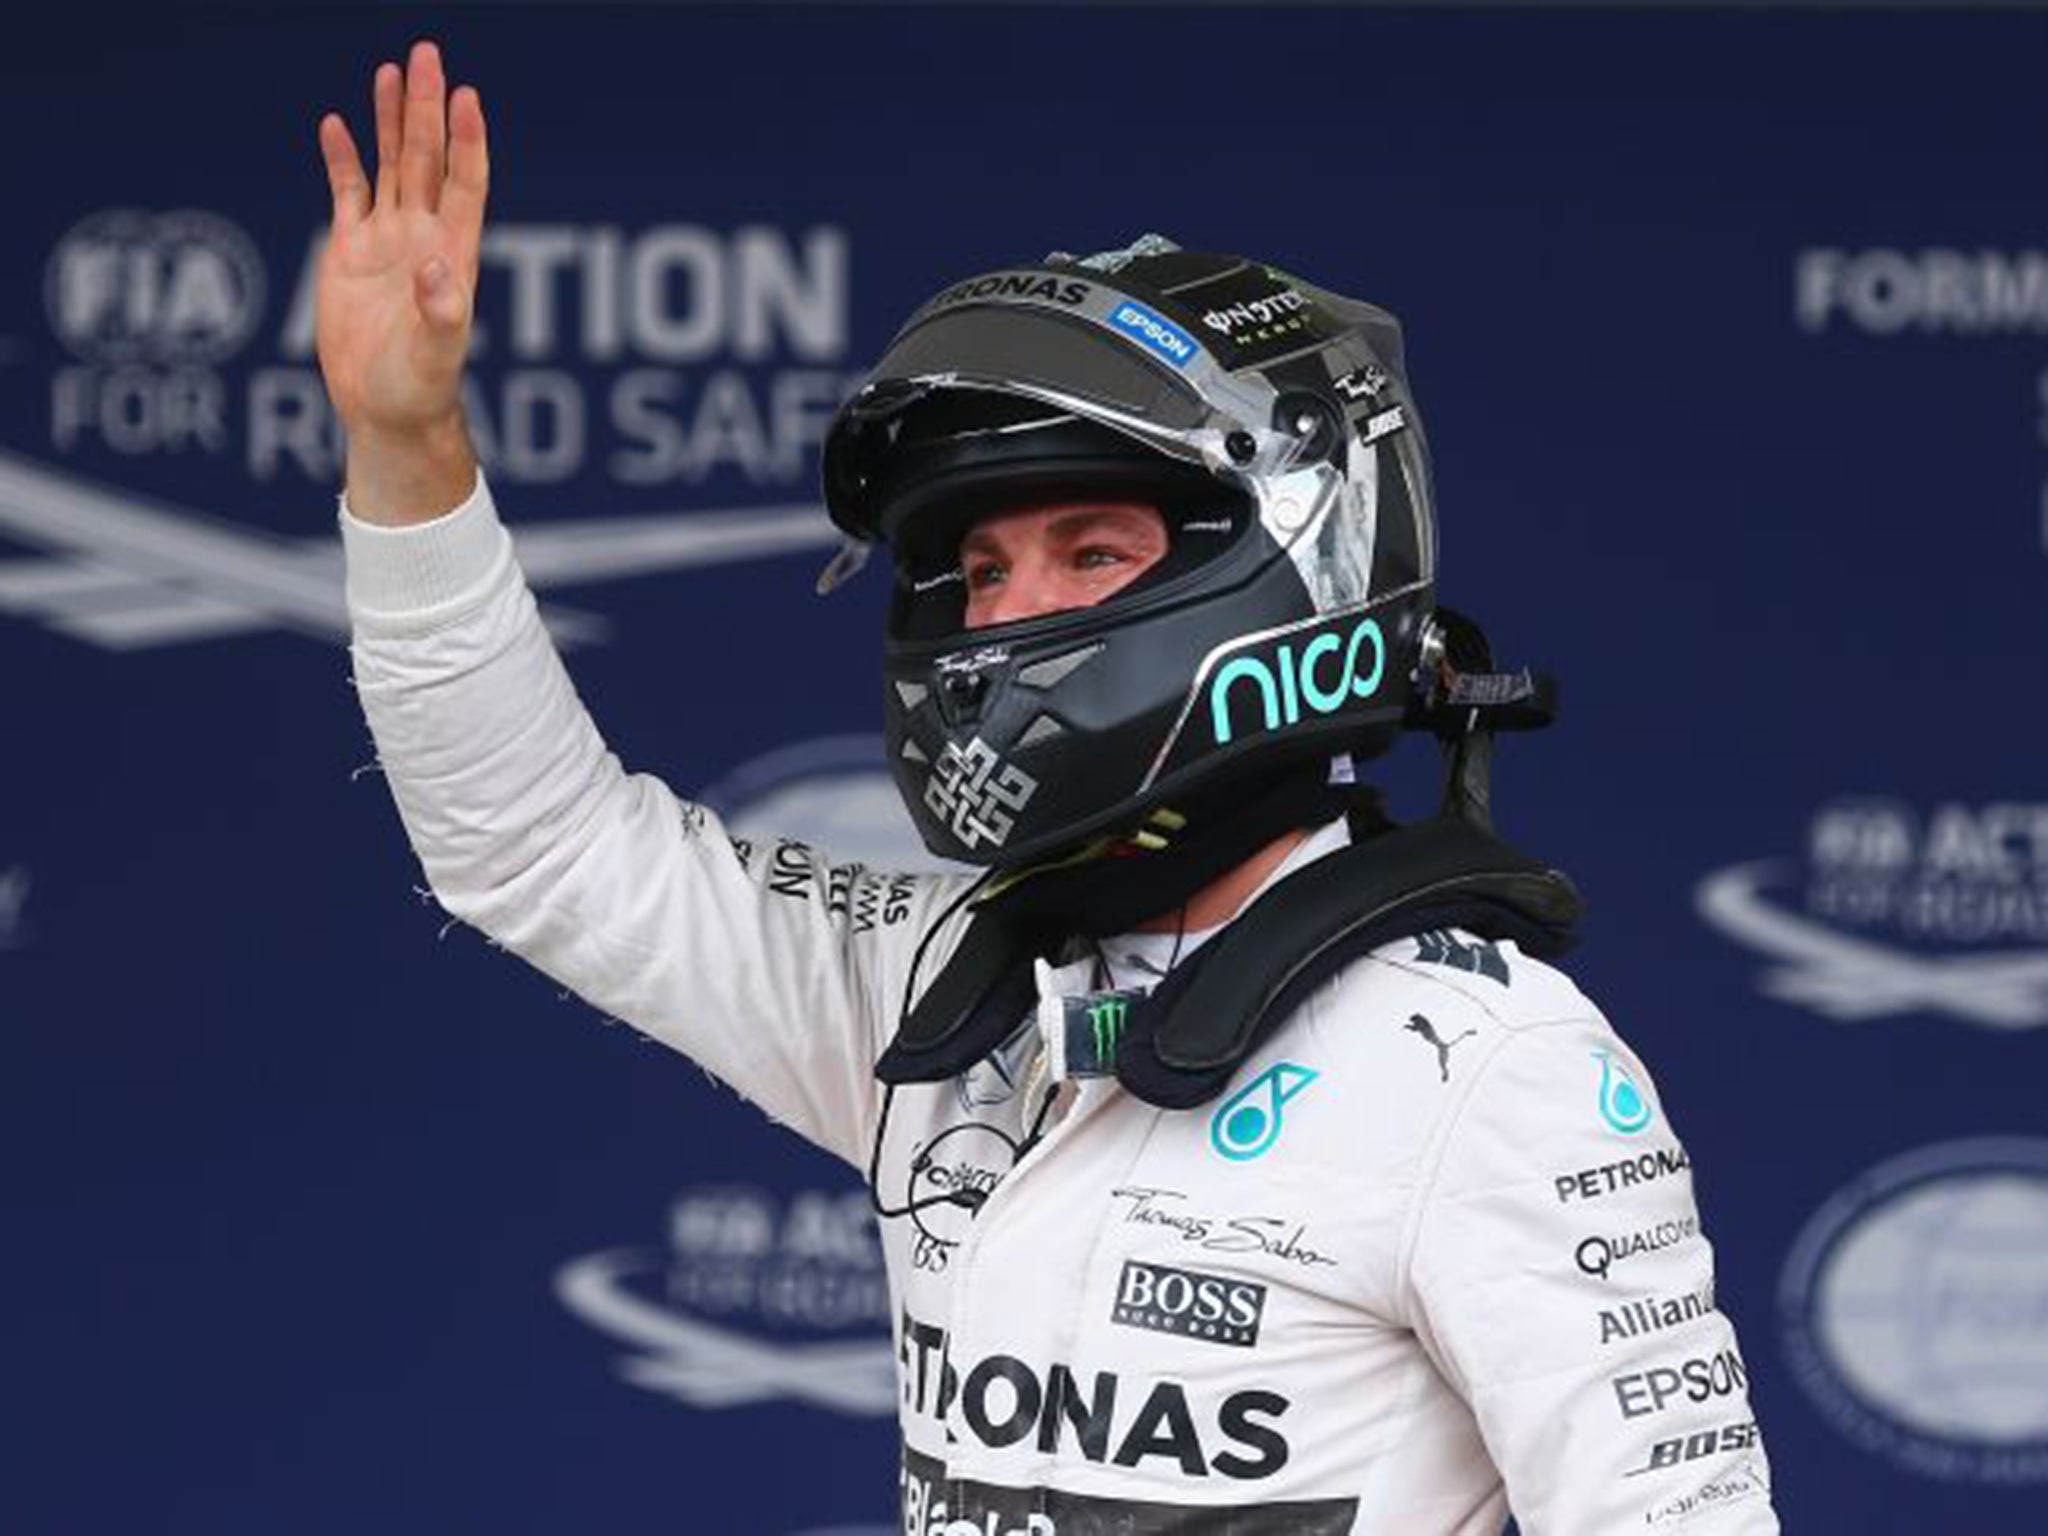 Nico Rosberg took his fourth consecutive pole position